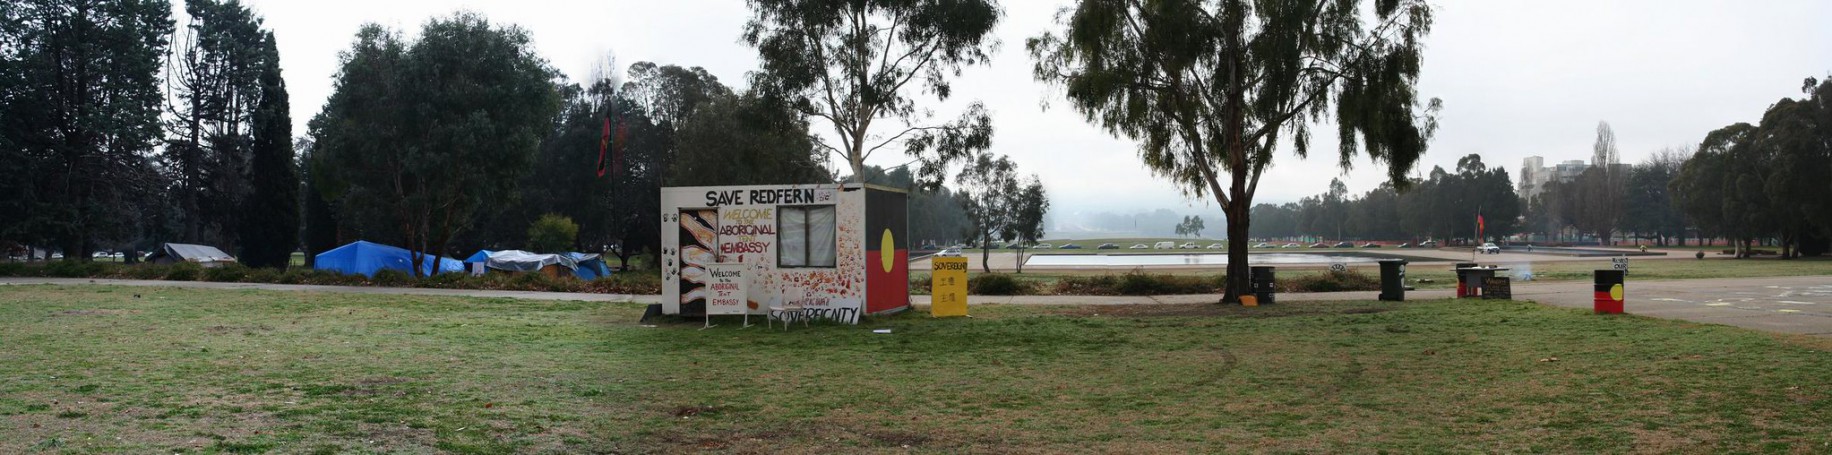 Aboriginal Tent Embassy Canberra